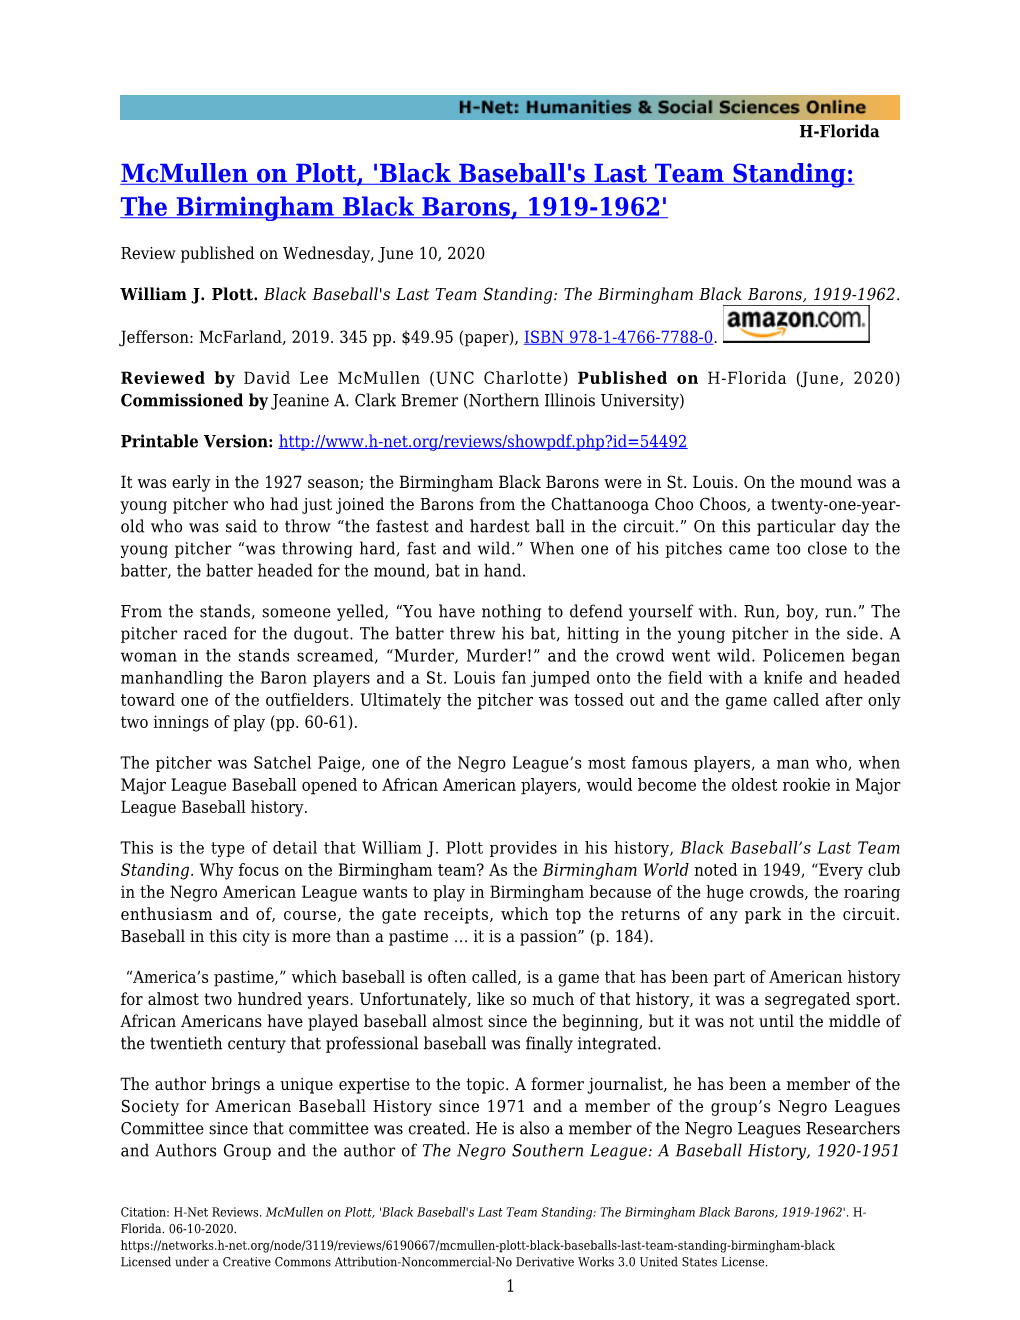 'Black Baseball's Last Team Standing: the Birmingham Black Barons, 1919-1962'